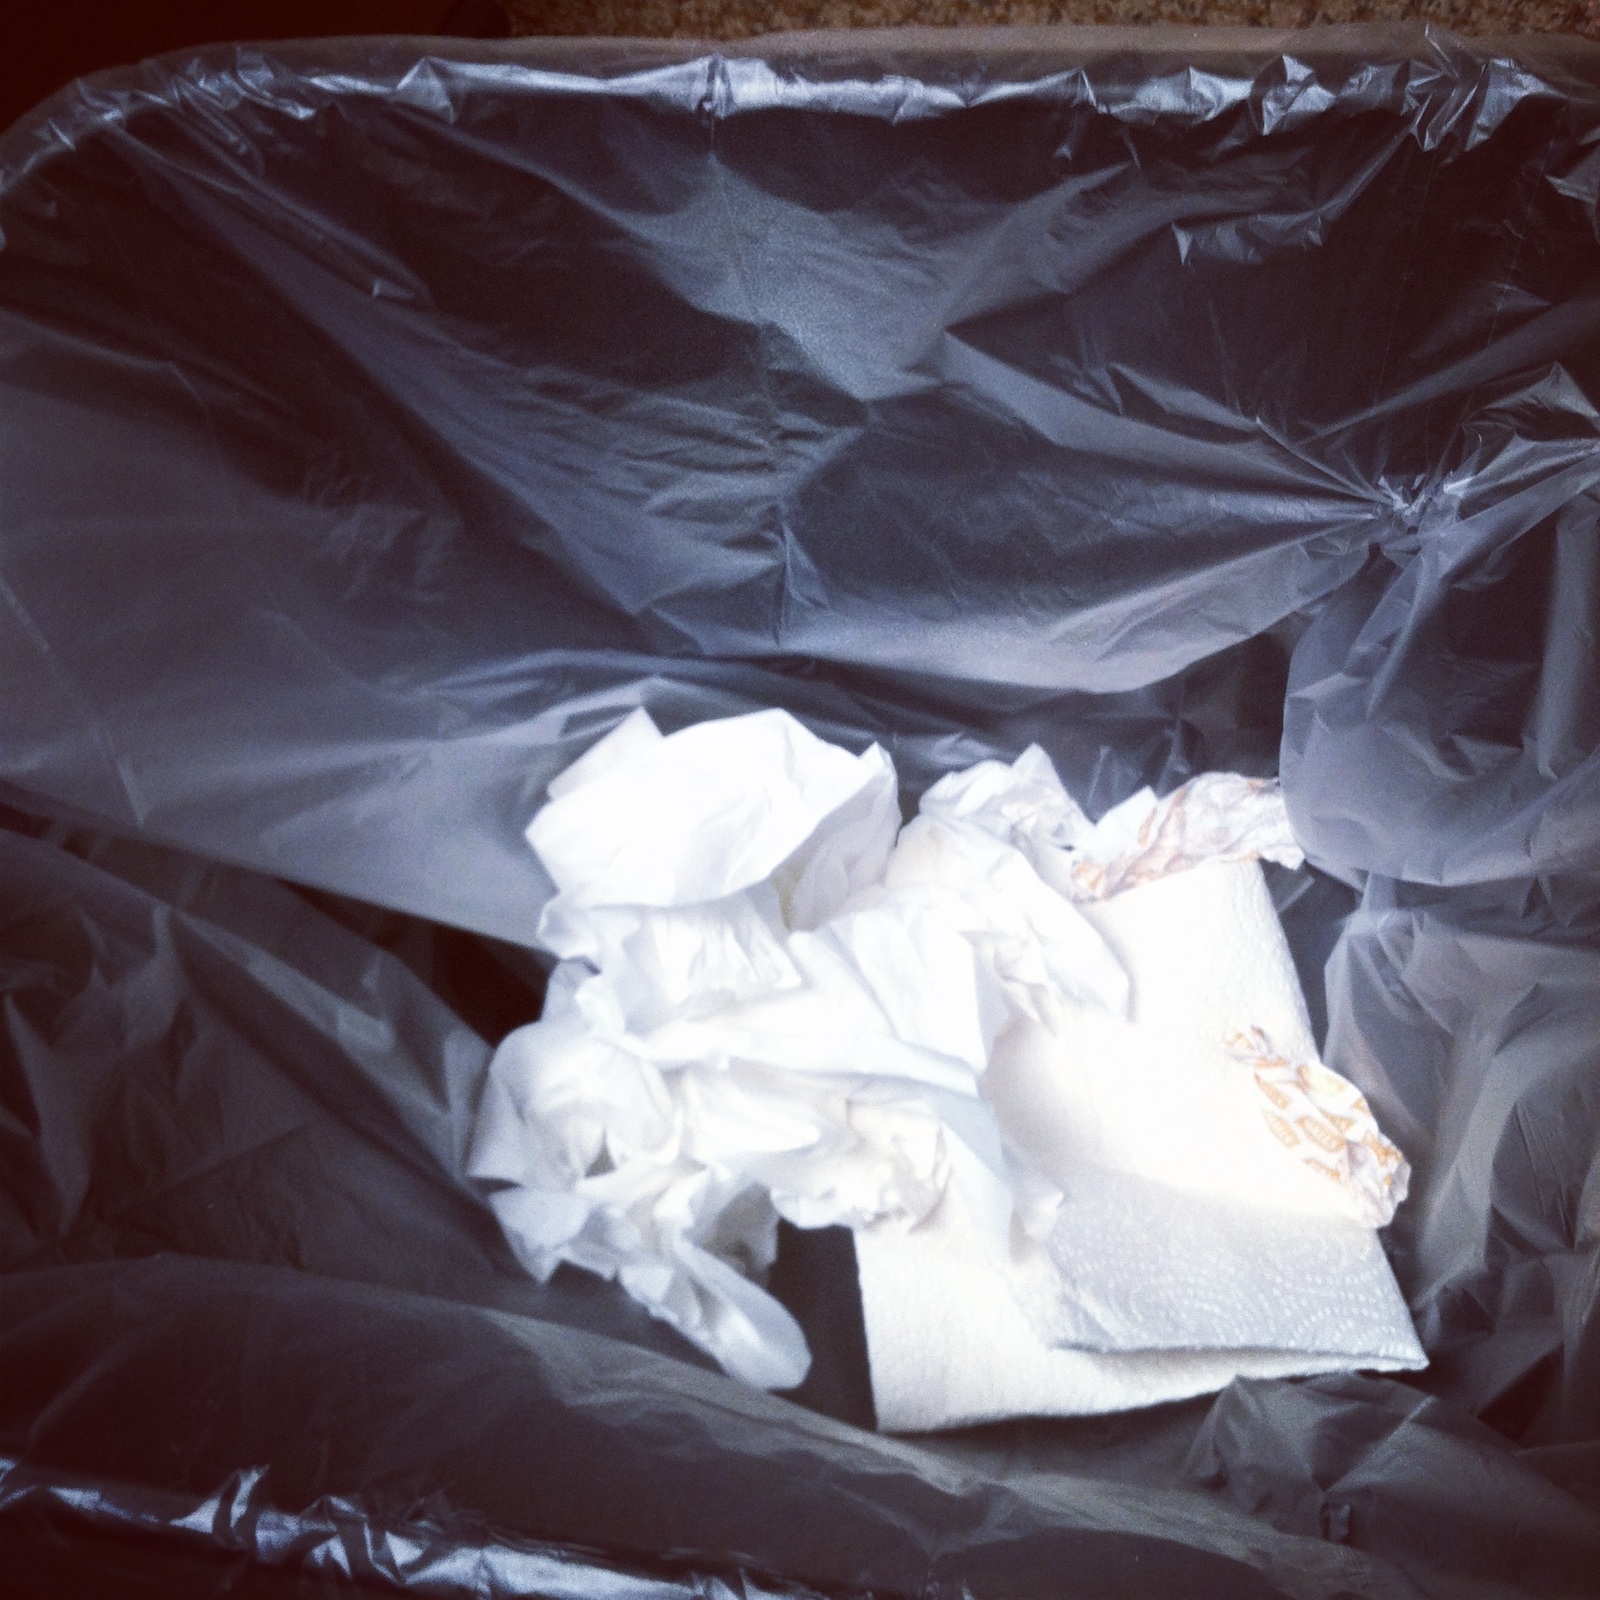 Dirty Kleenex: the Smallpox Blanket of 2014